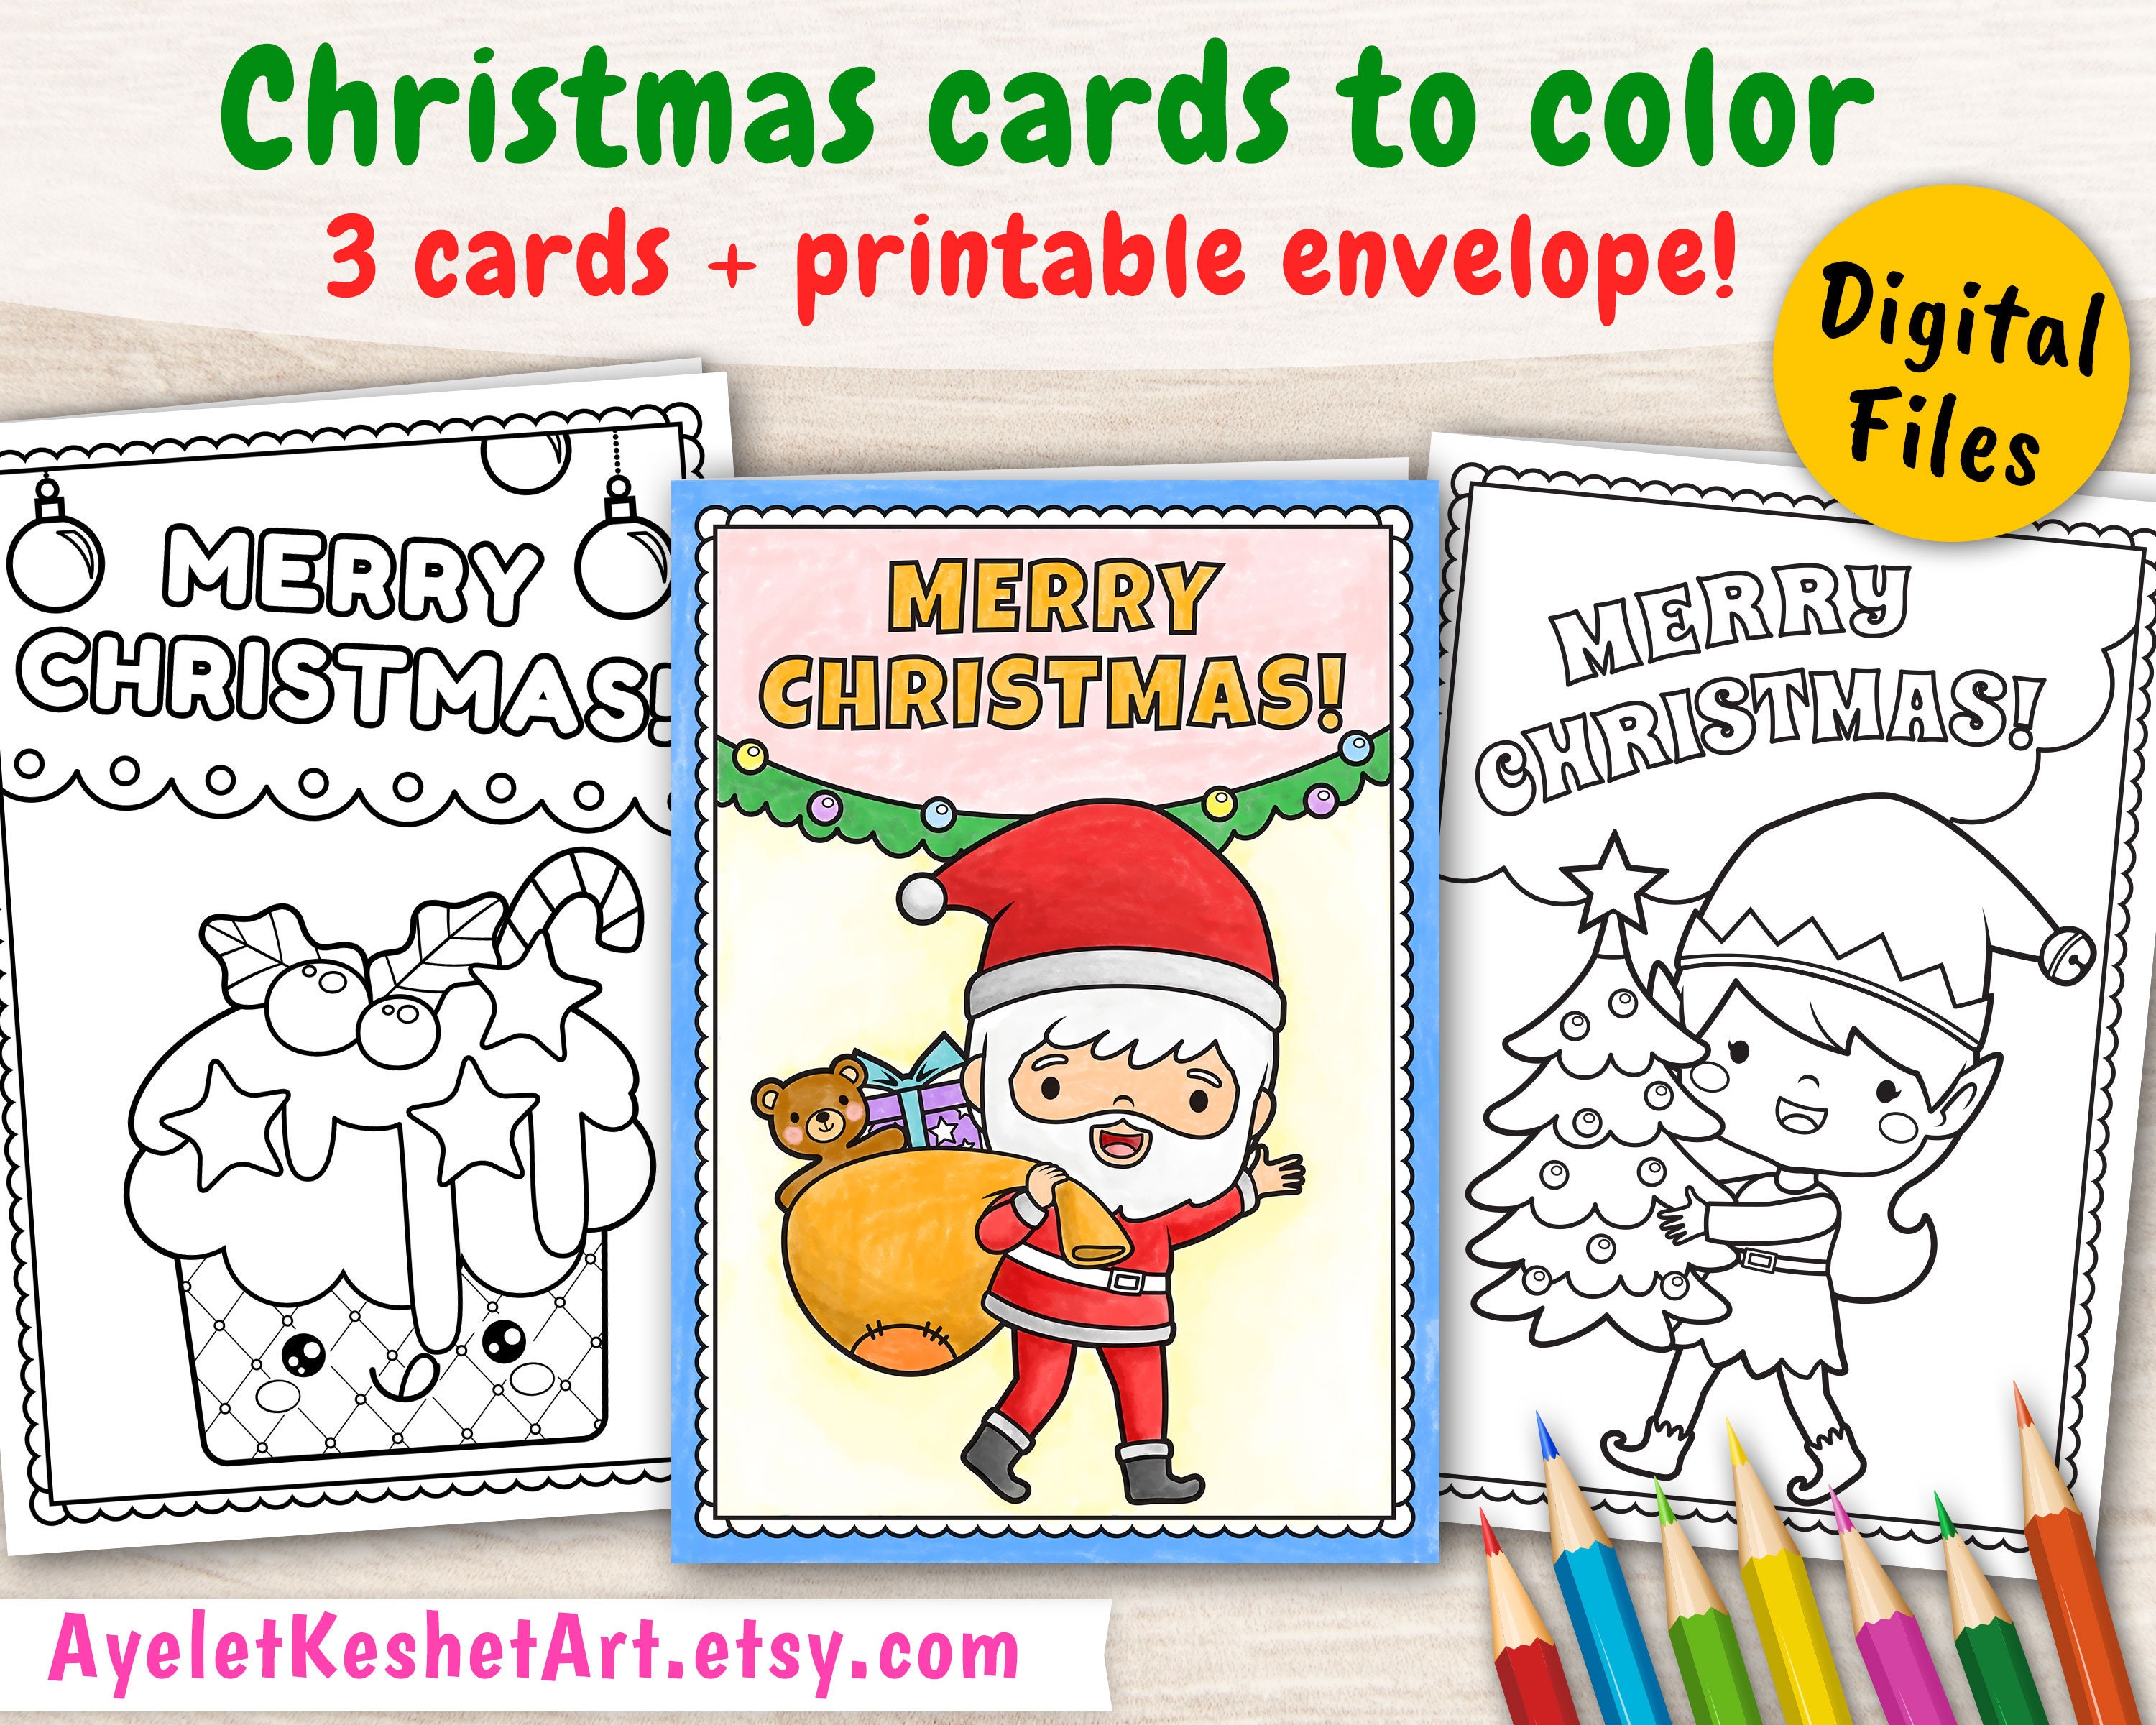 free printable gift box templates to color - Ayelet Keshet